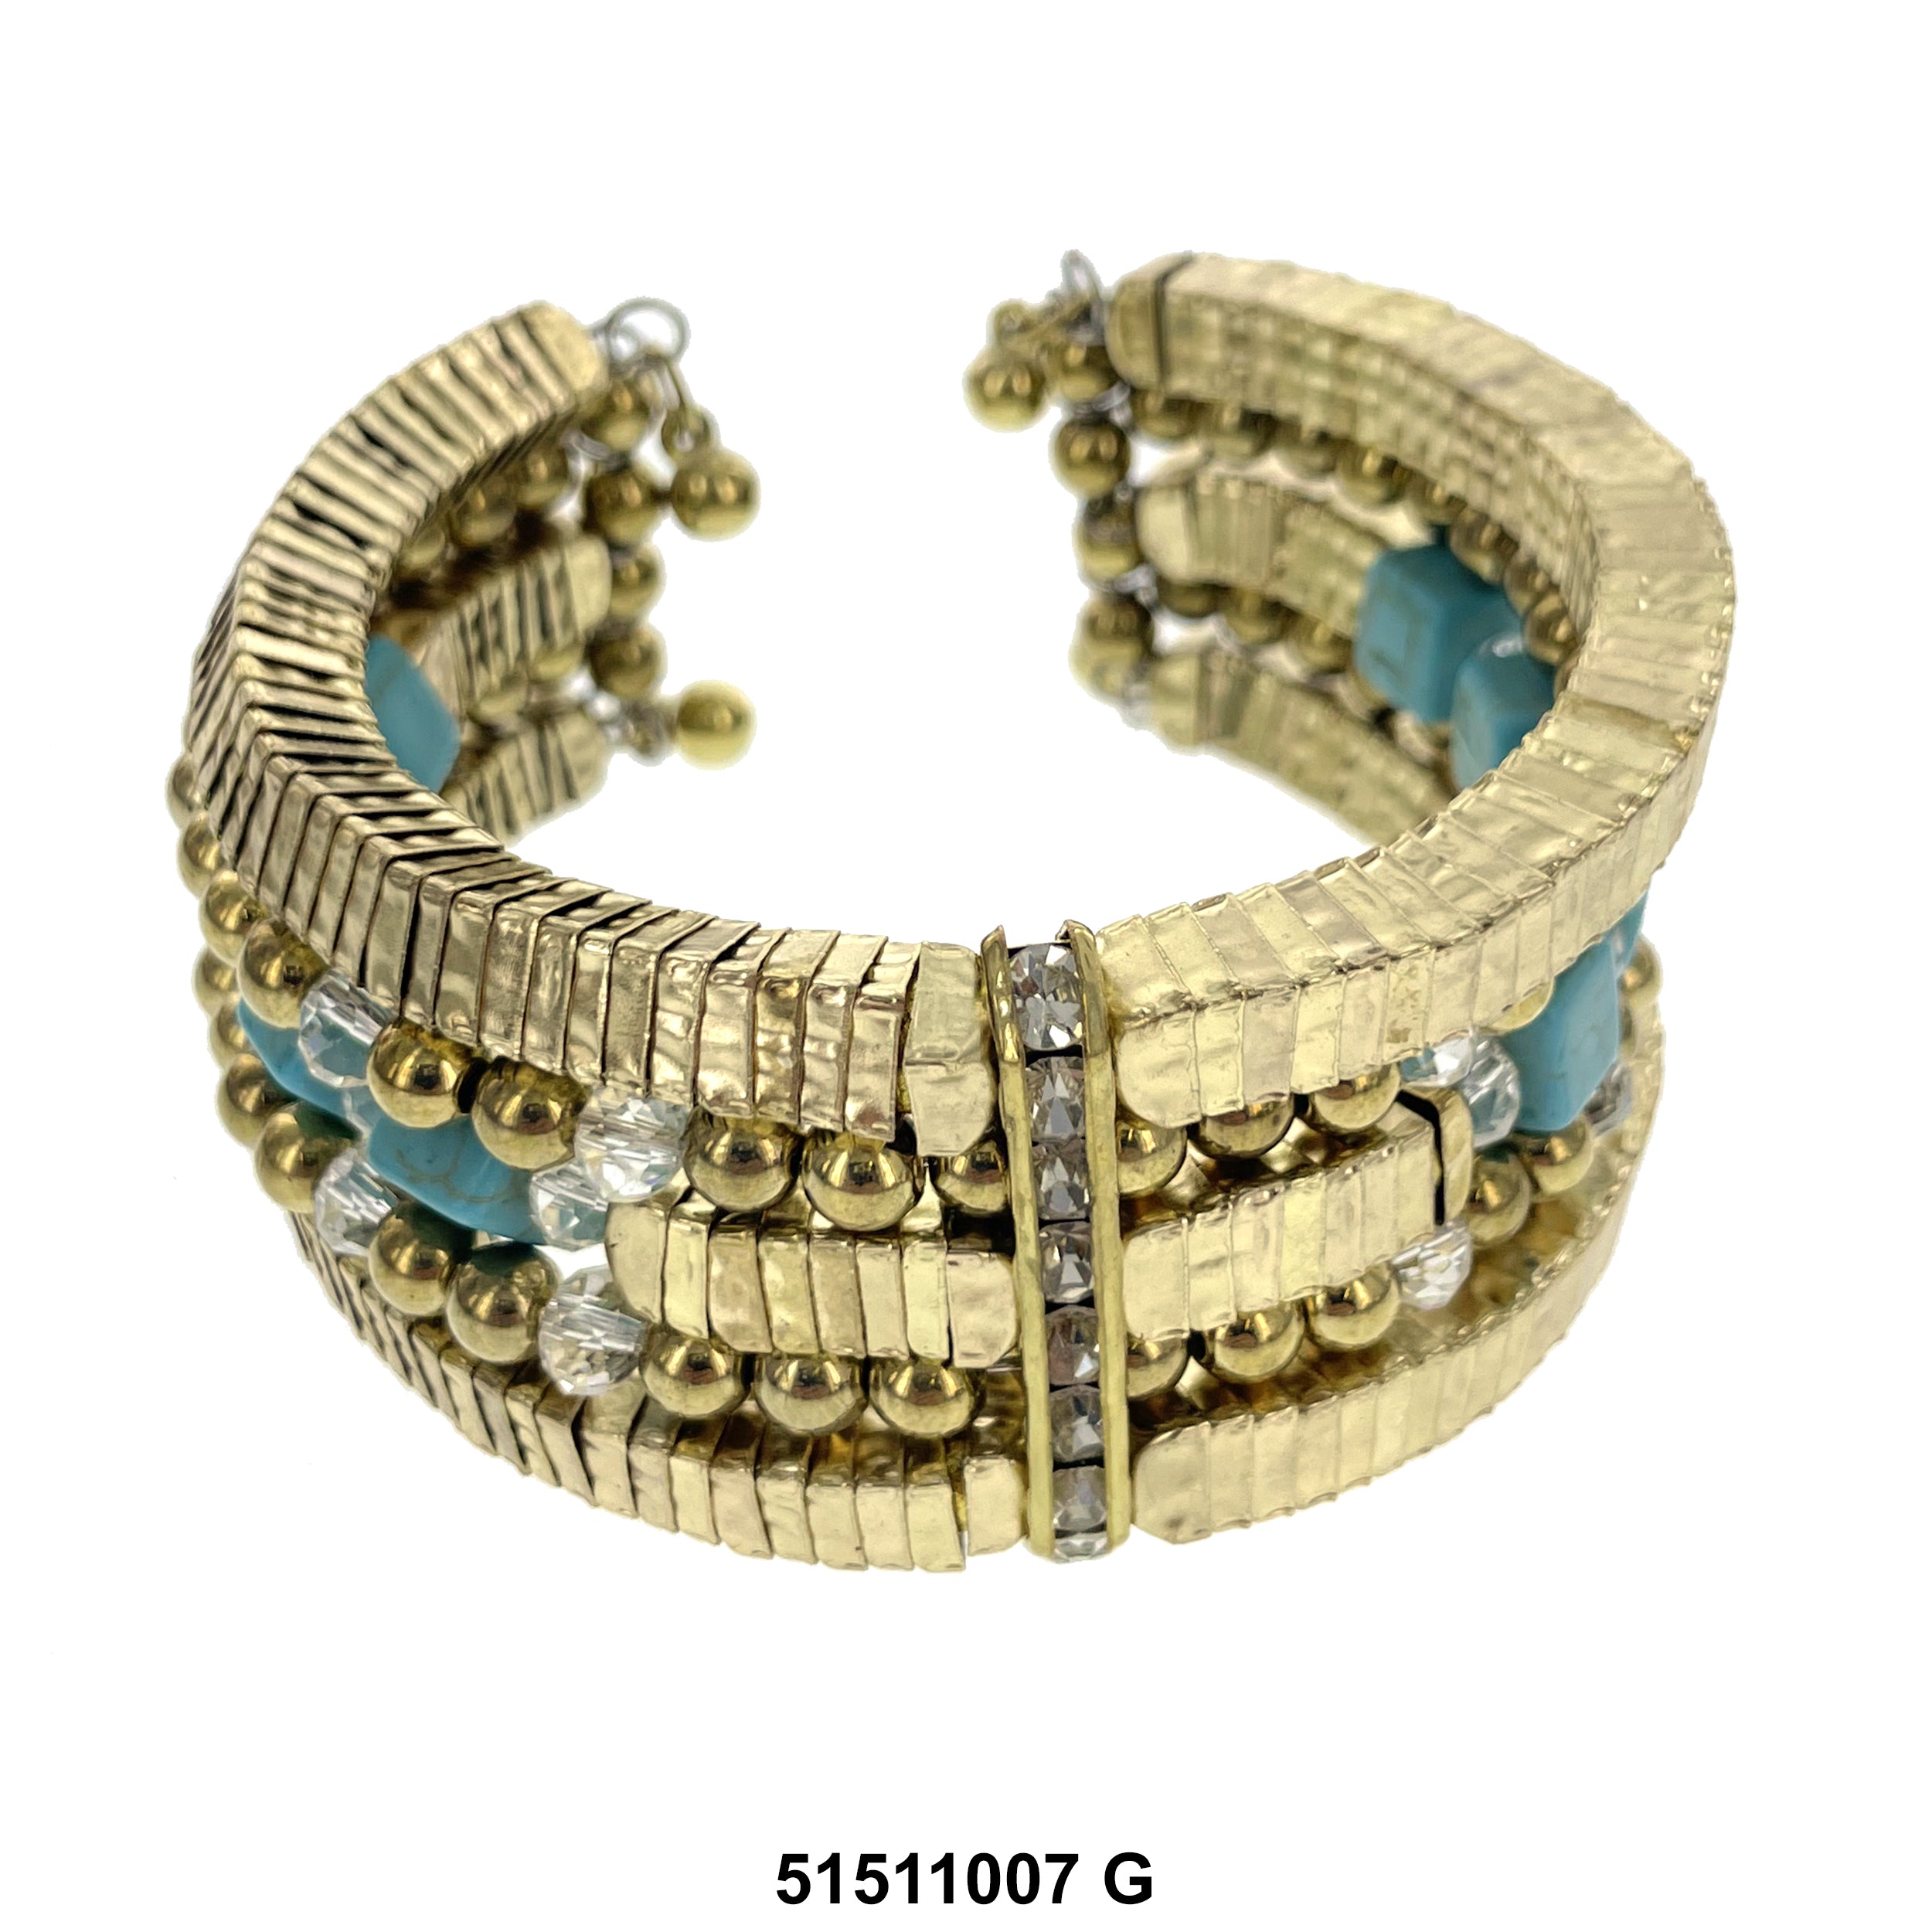 Cuff Bangle Bracelet 51511007 G